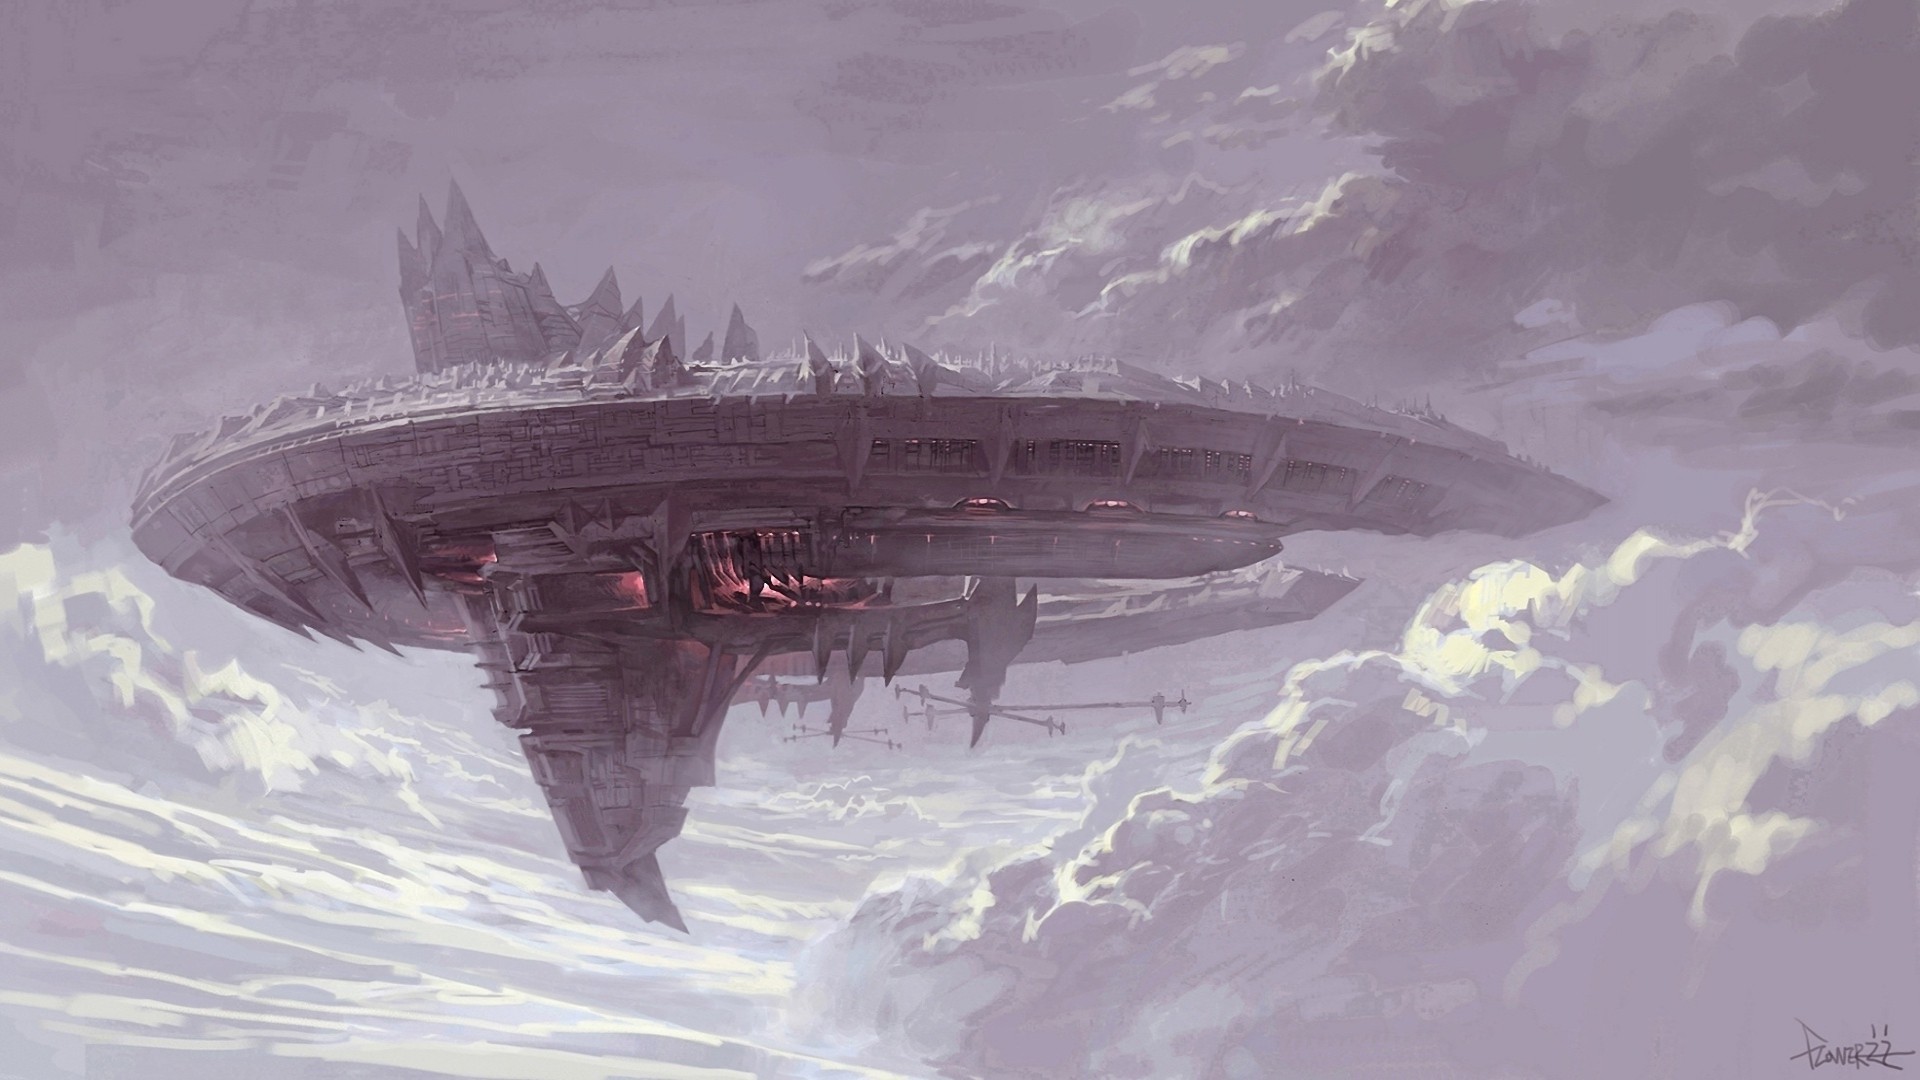 General 1920x1080 spaceship science fiction artwork